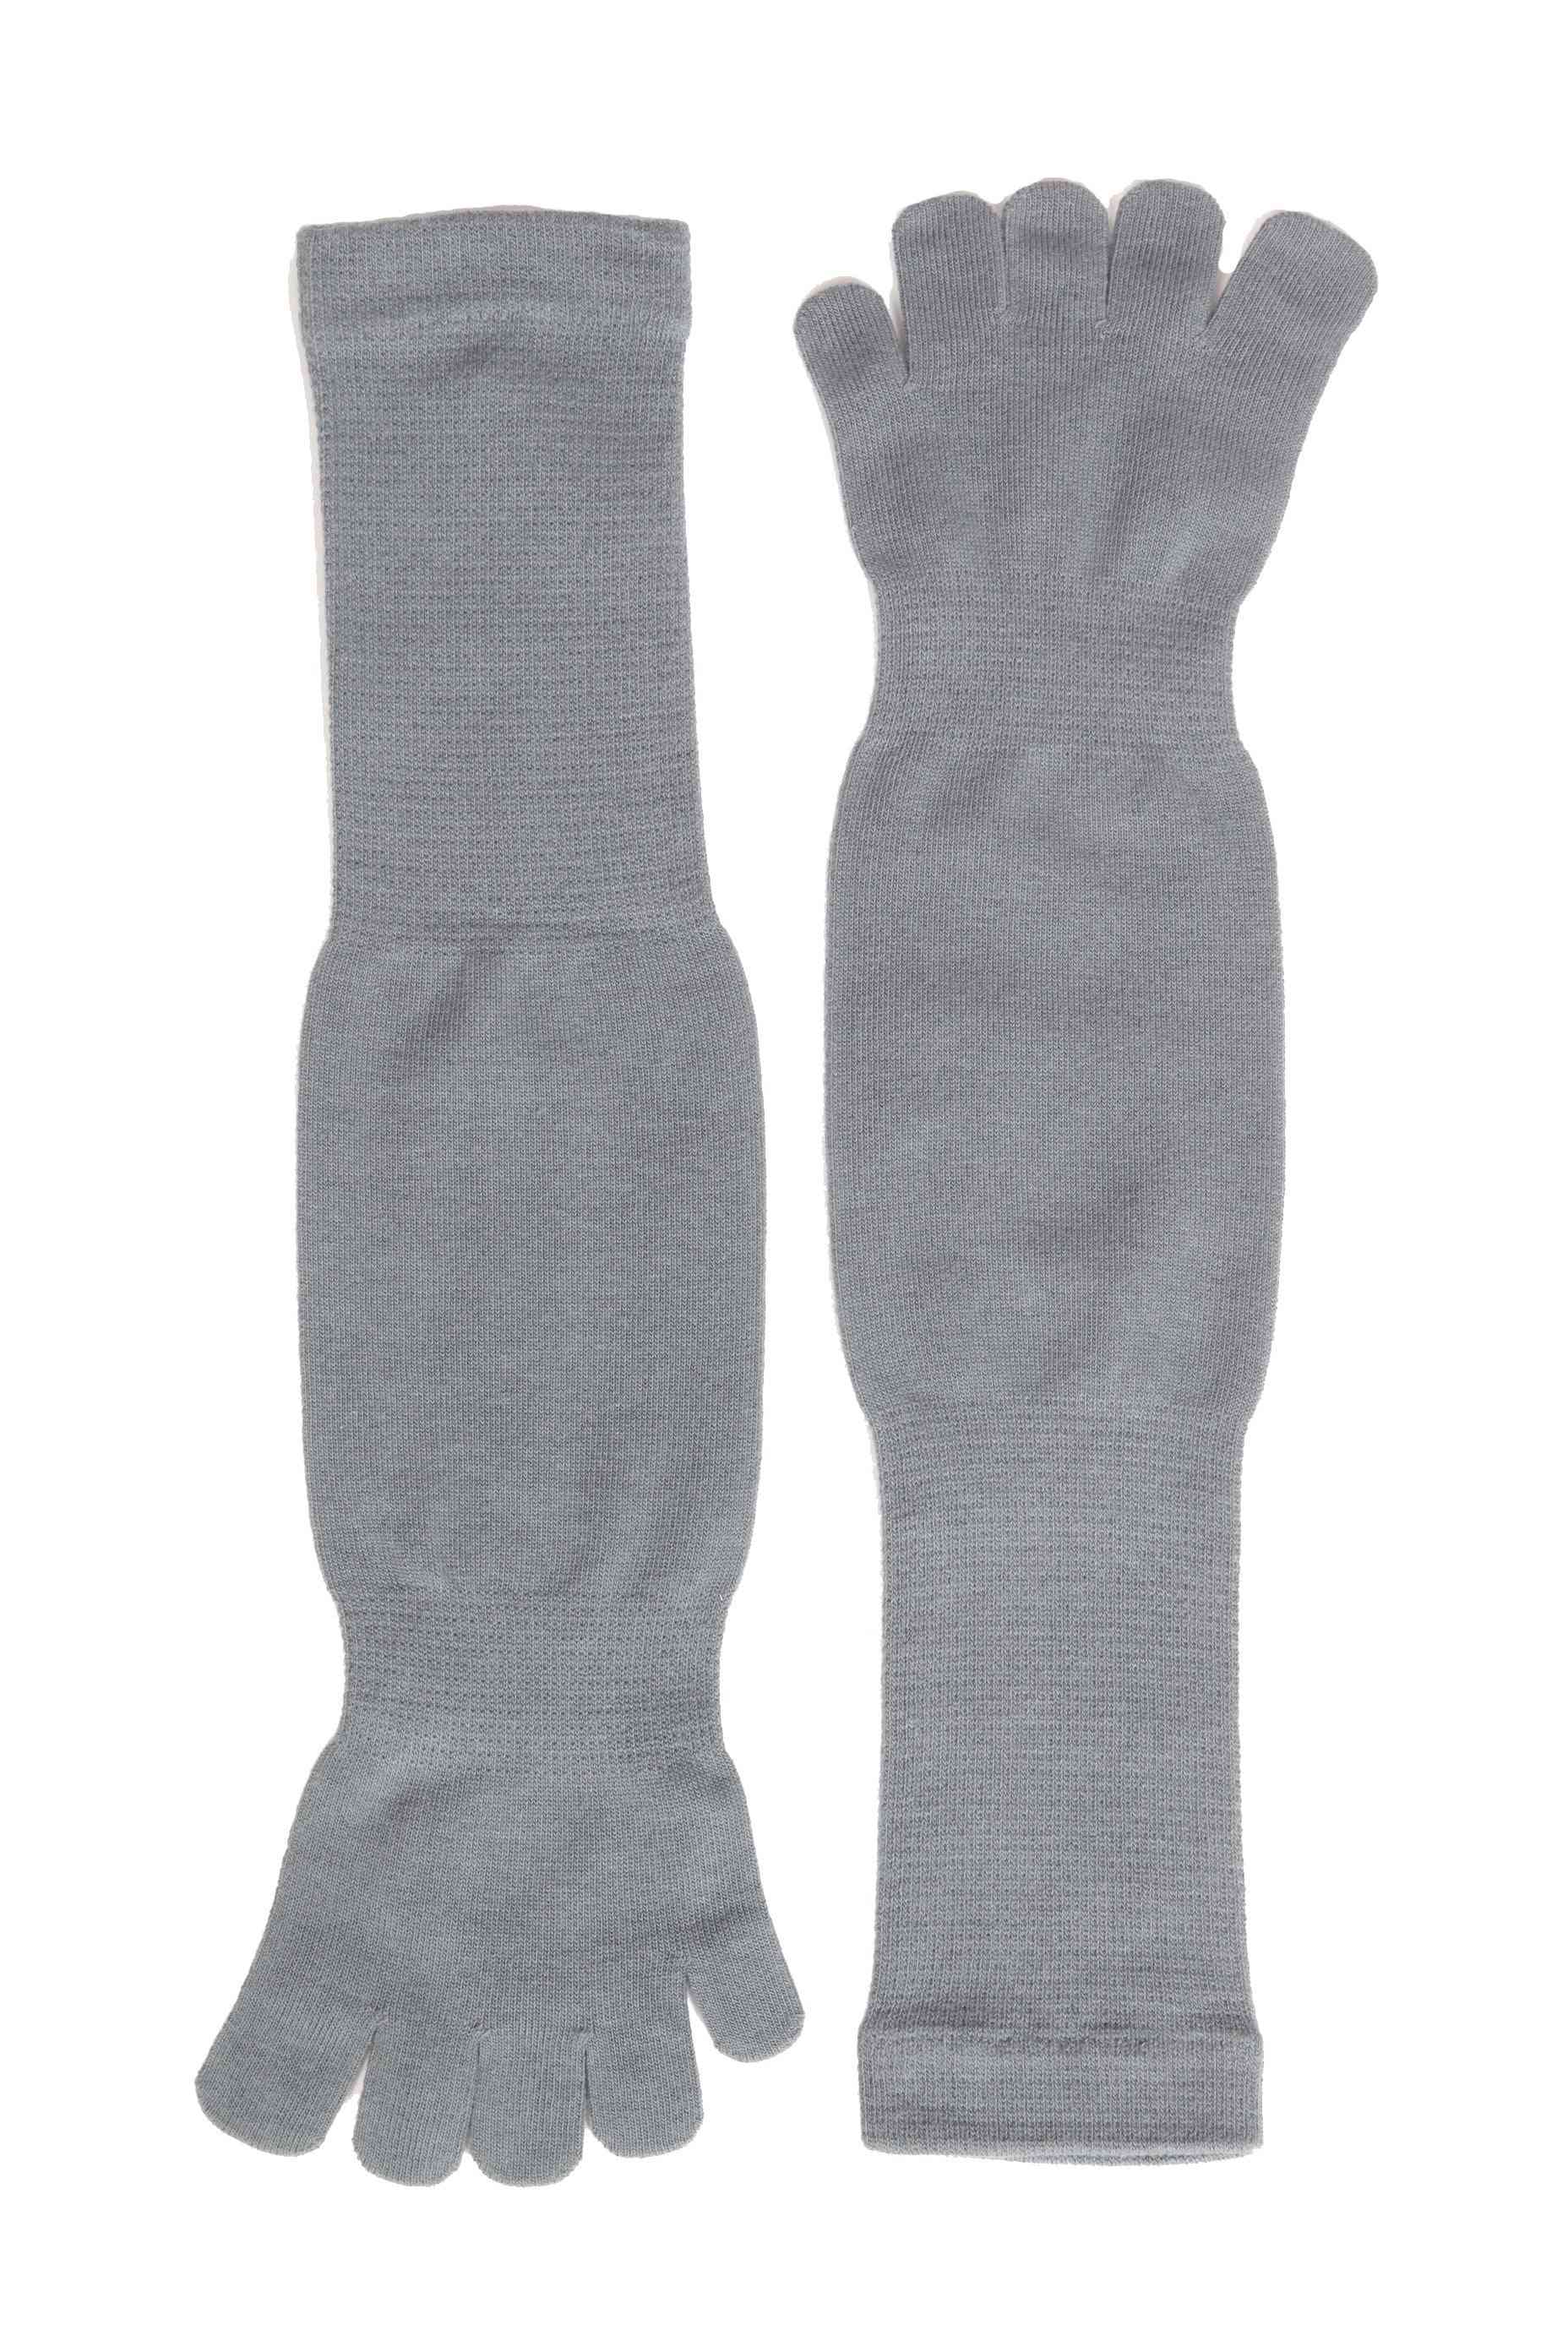 Soft & Durable Toe Socks